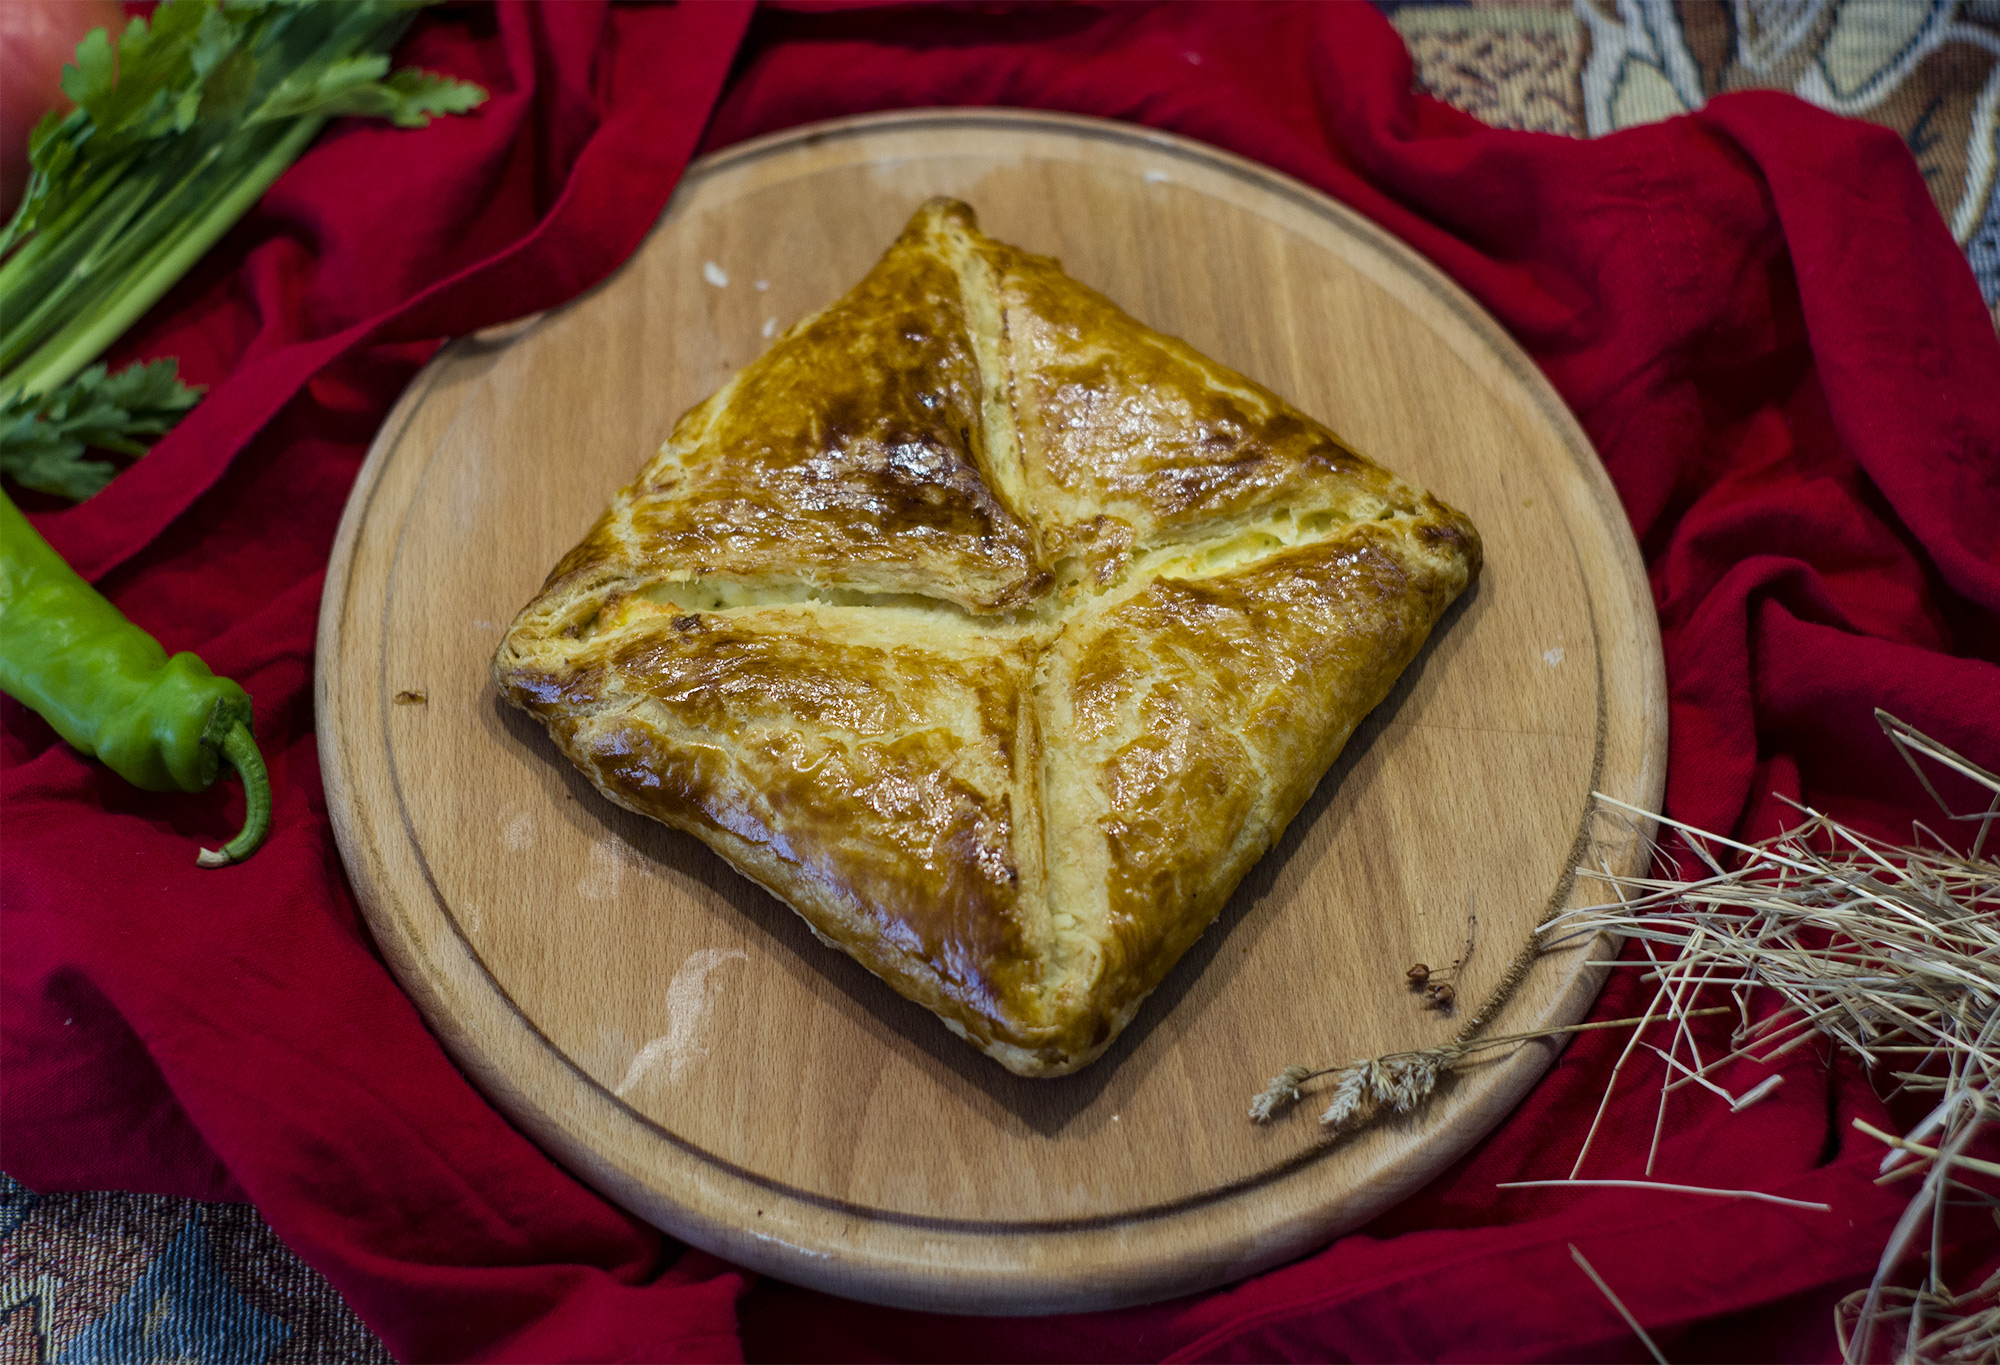 Пеновани хачапури (ფენოვანი ხაჭაპური), пошаговый рецепт на ккал, фото, ингредиенты - Nora